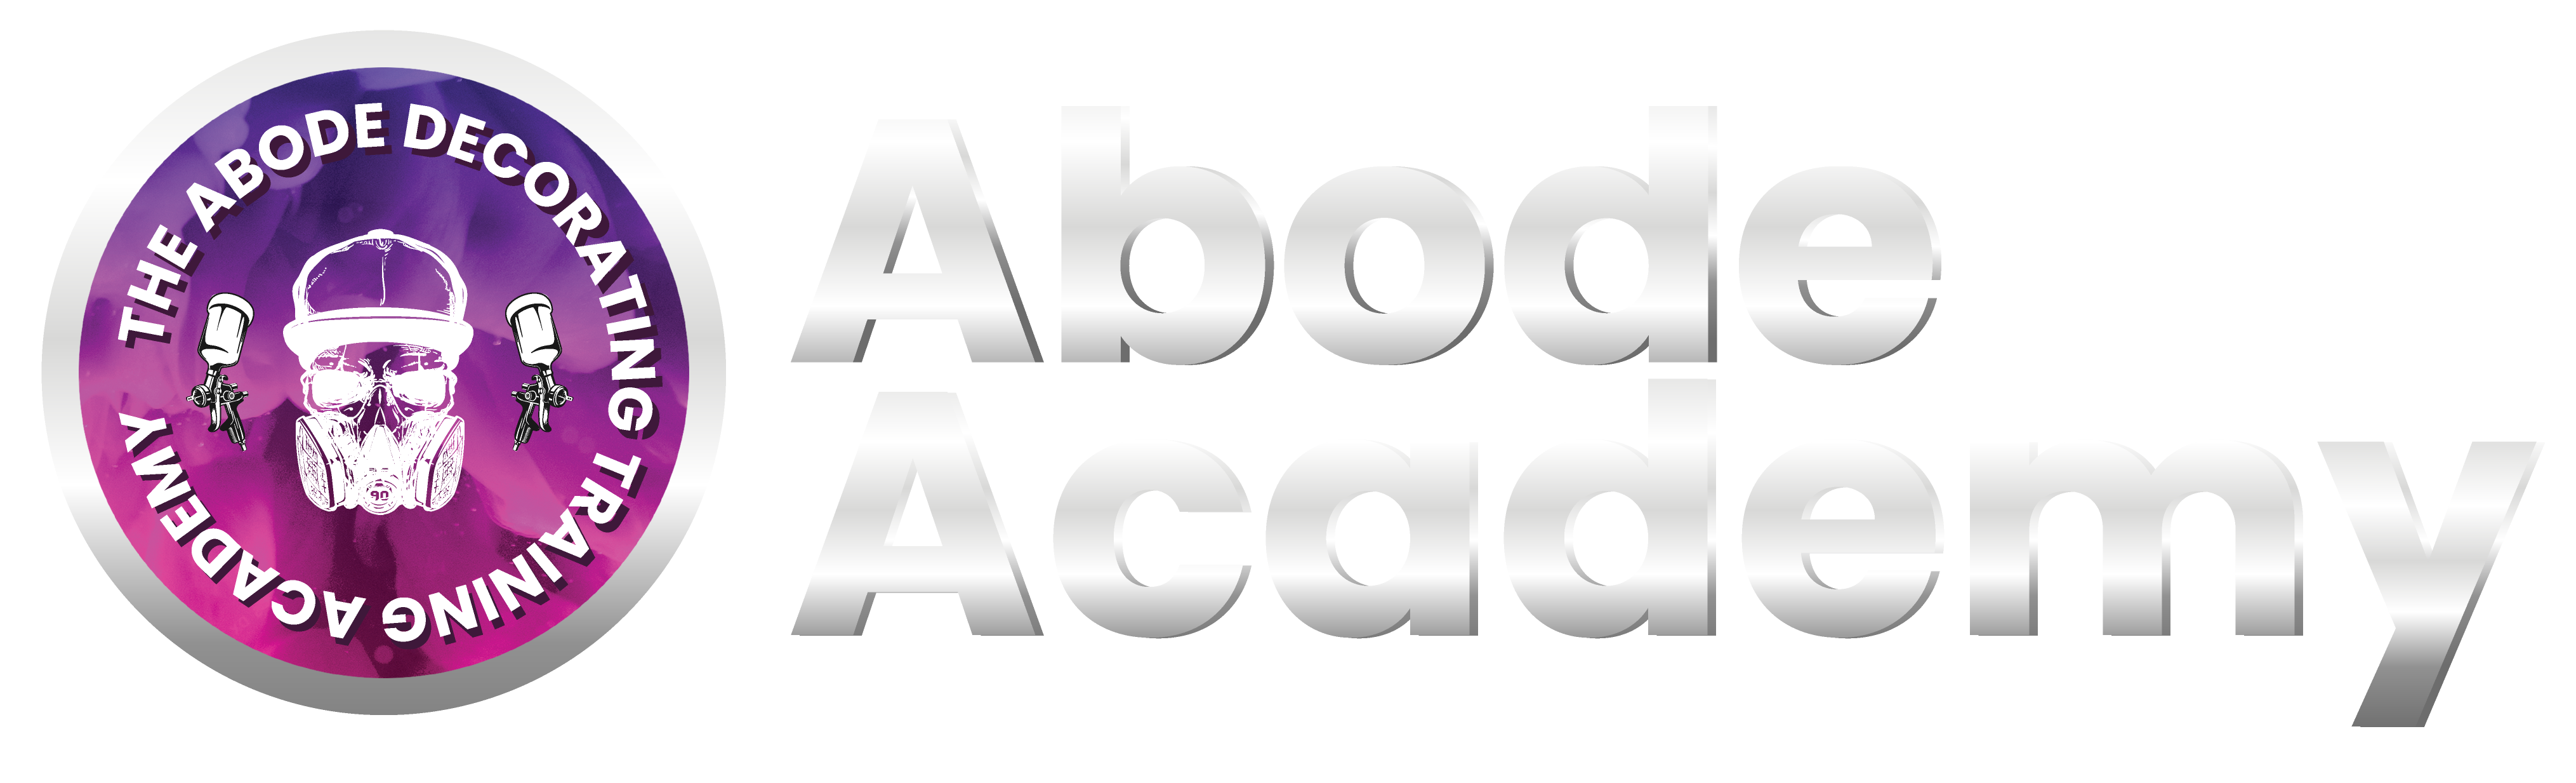 Abode Academy